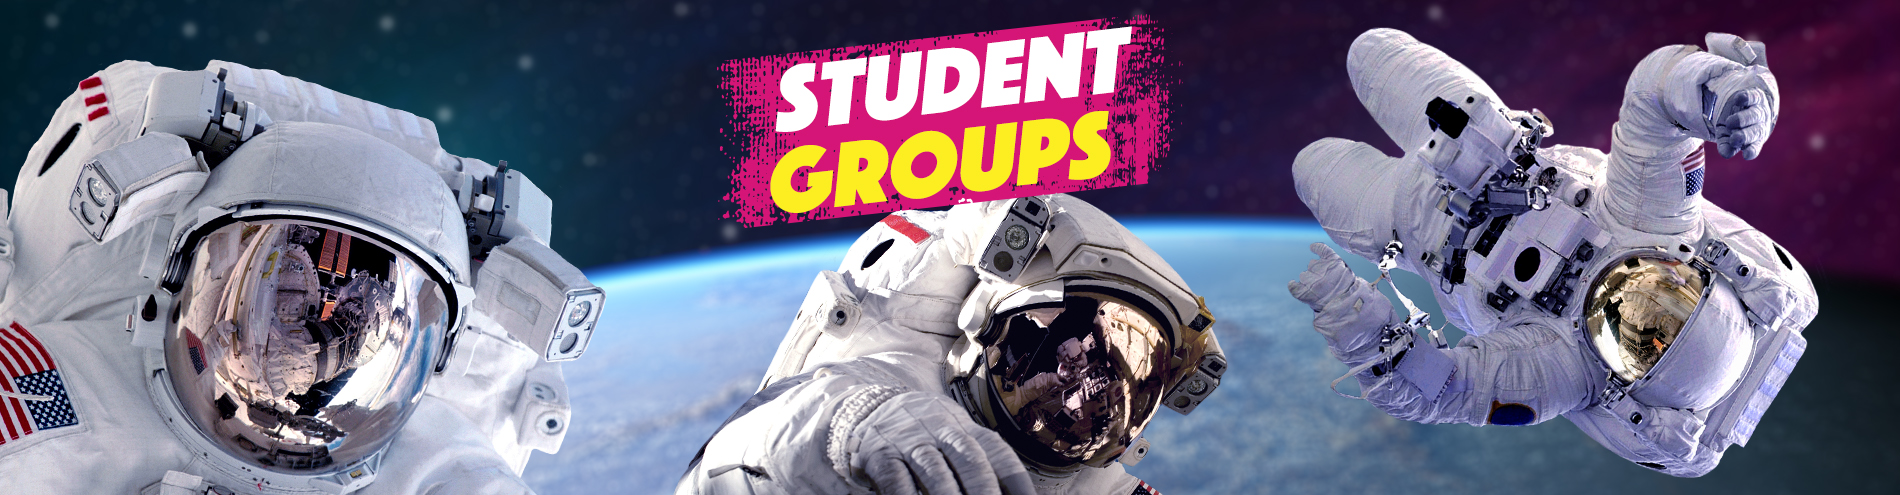 Student Groups Header